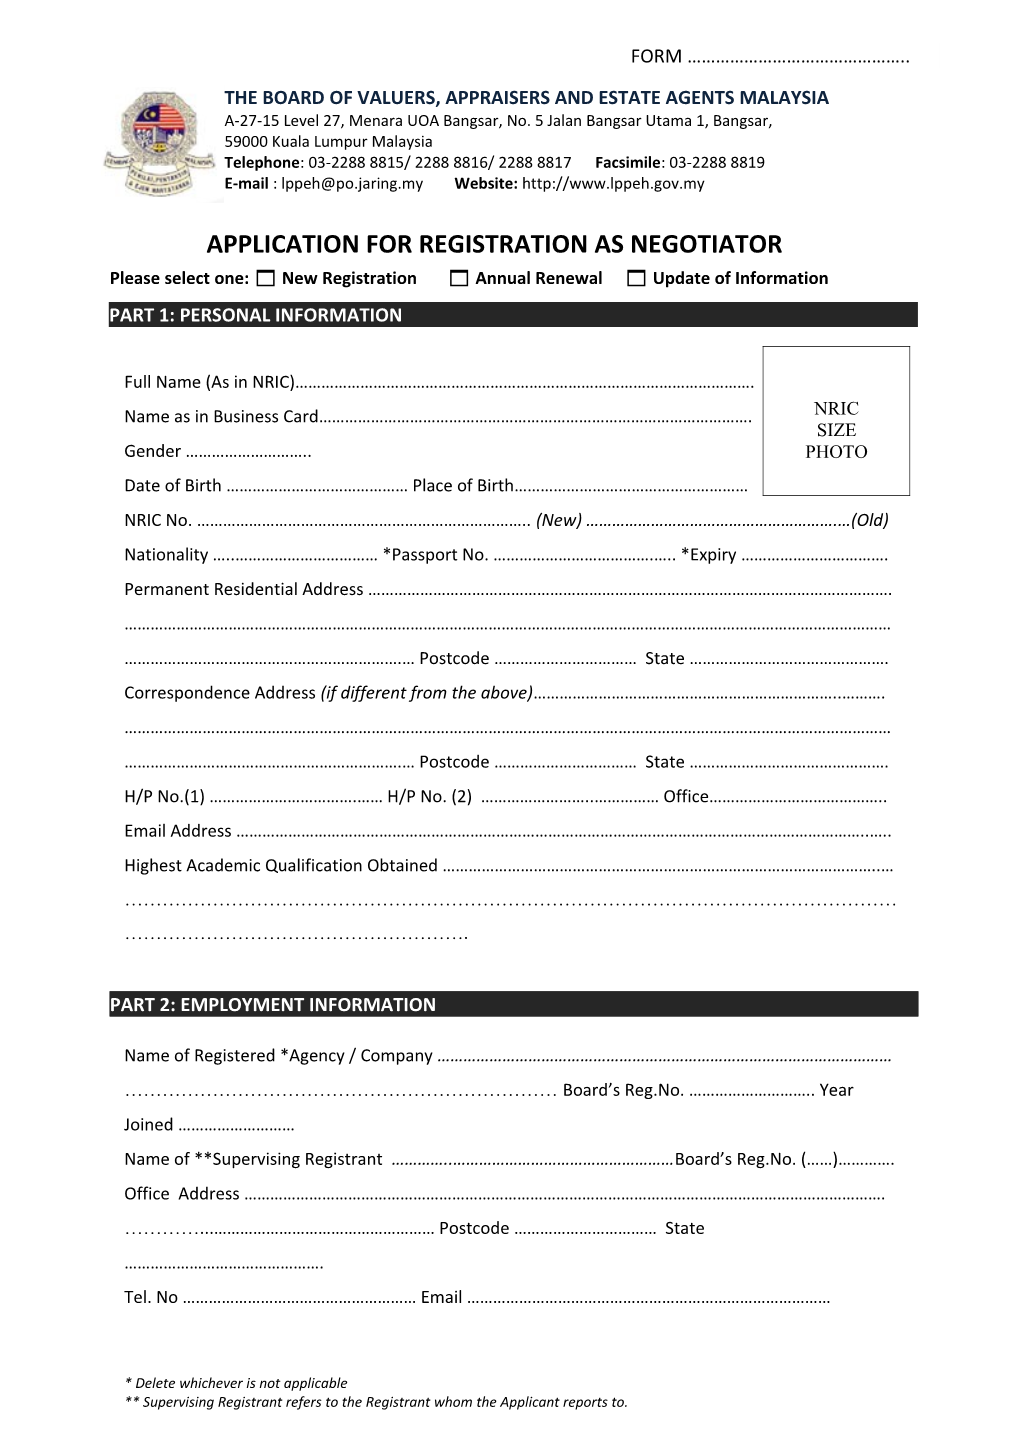 Application for Registration As Negotiator